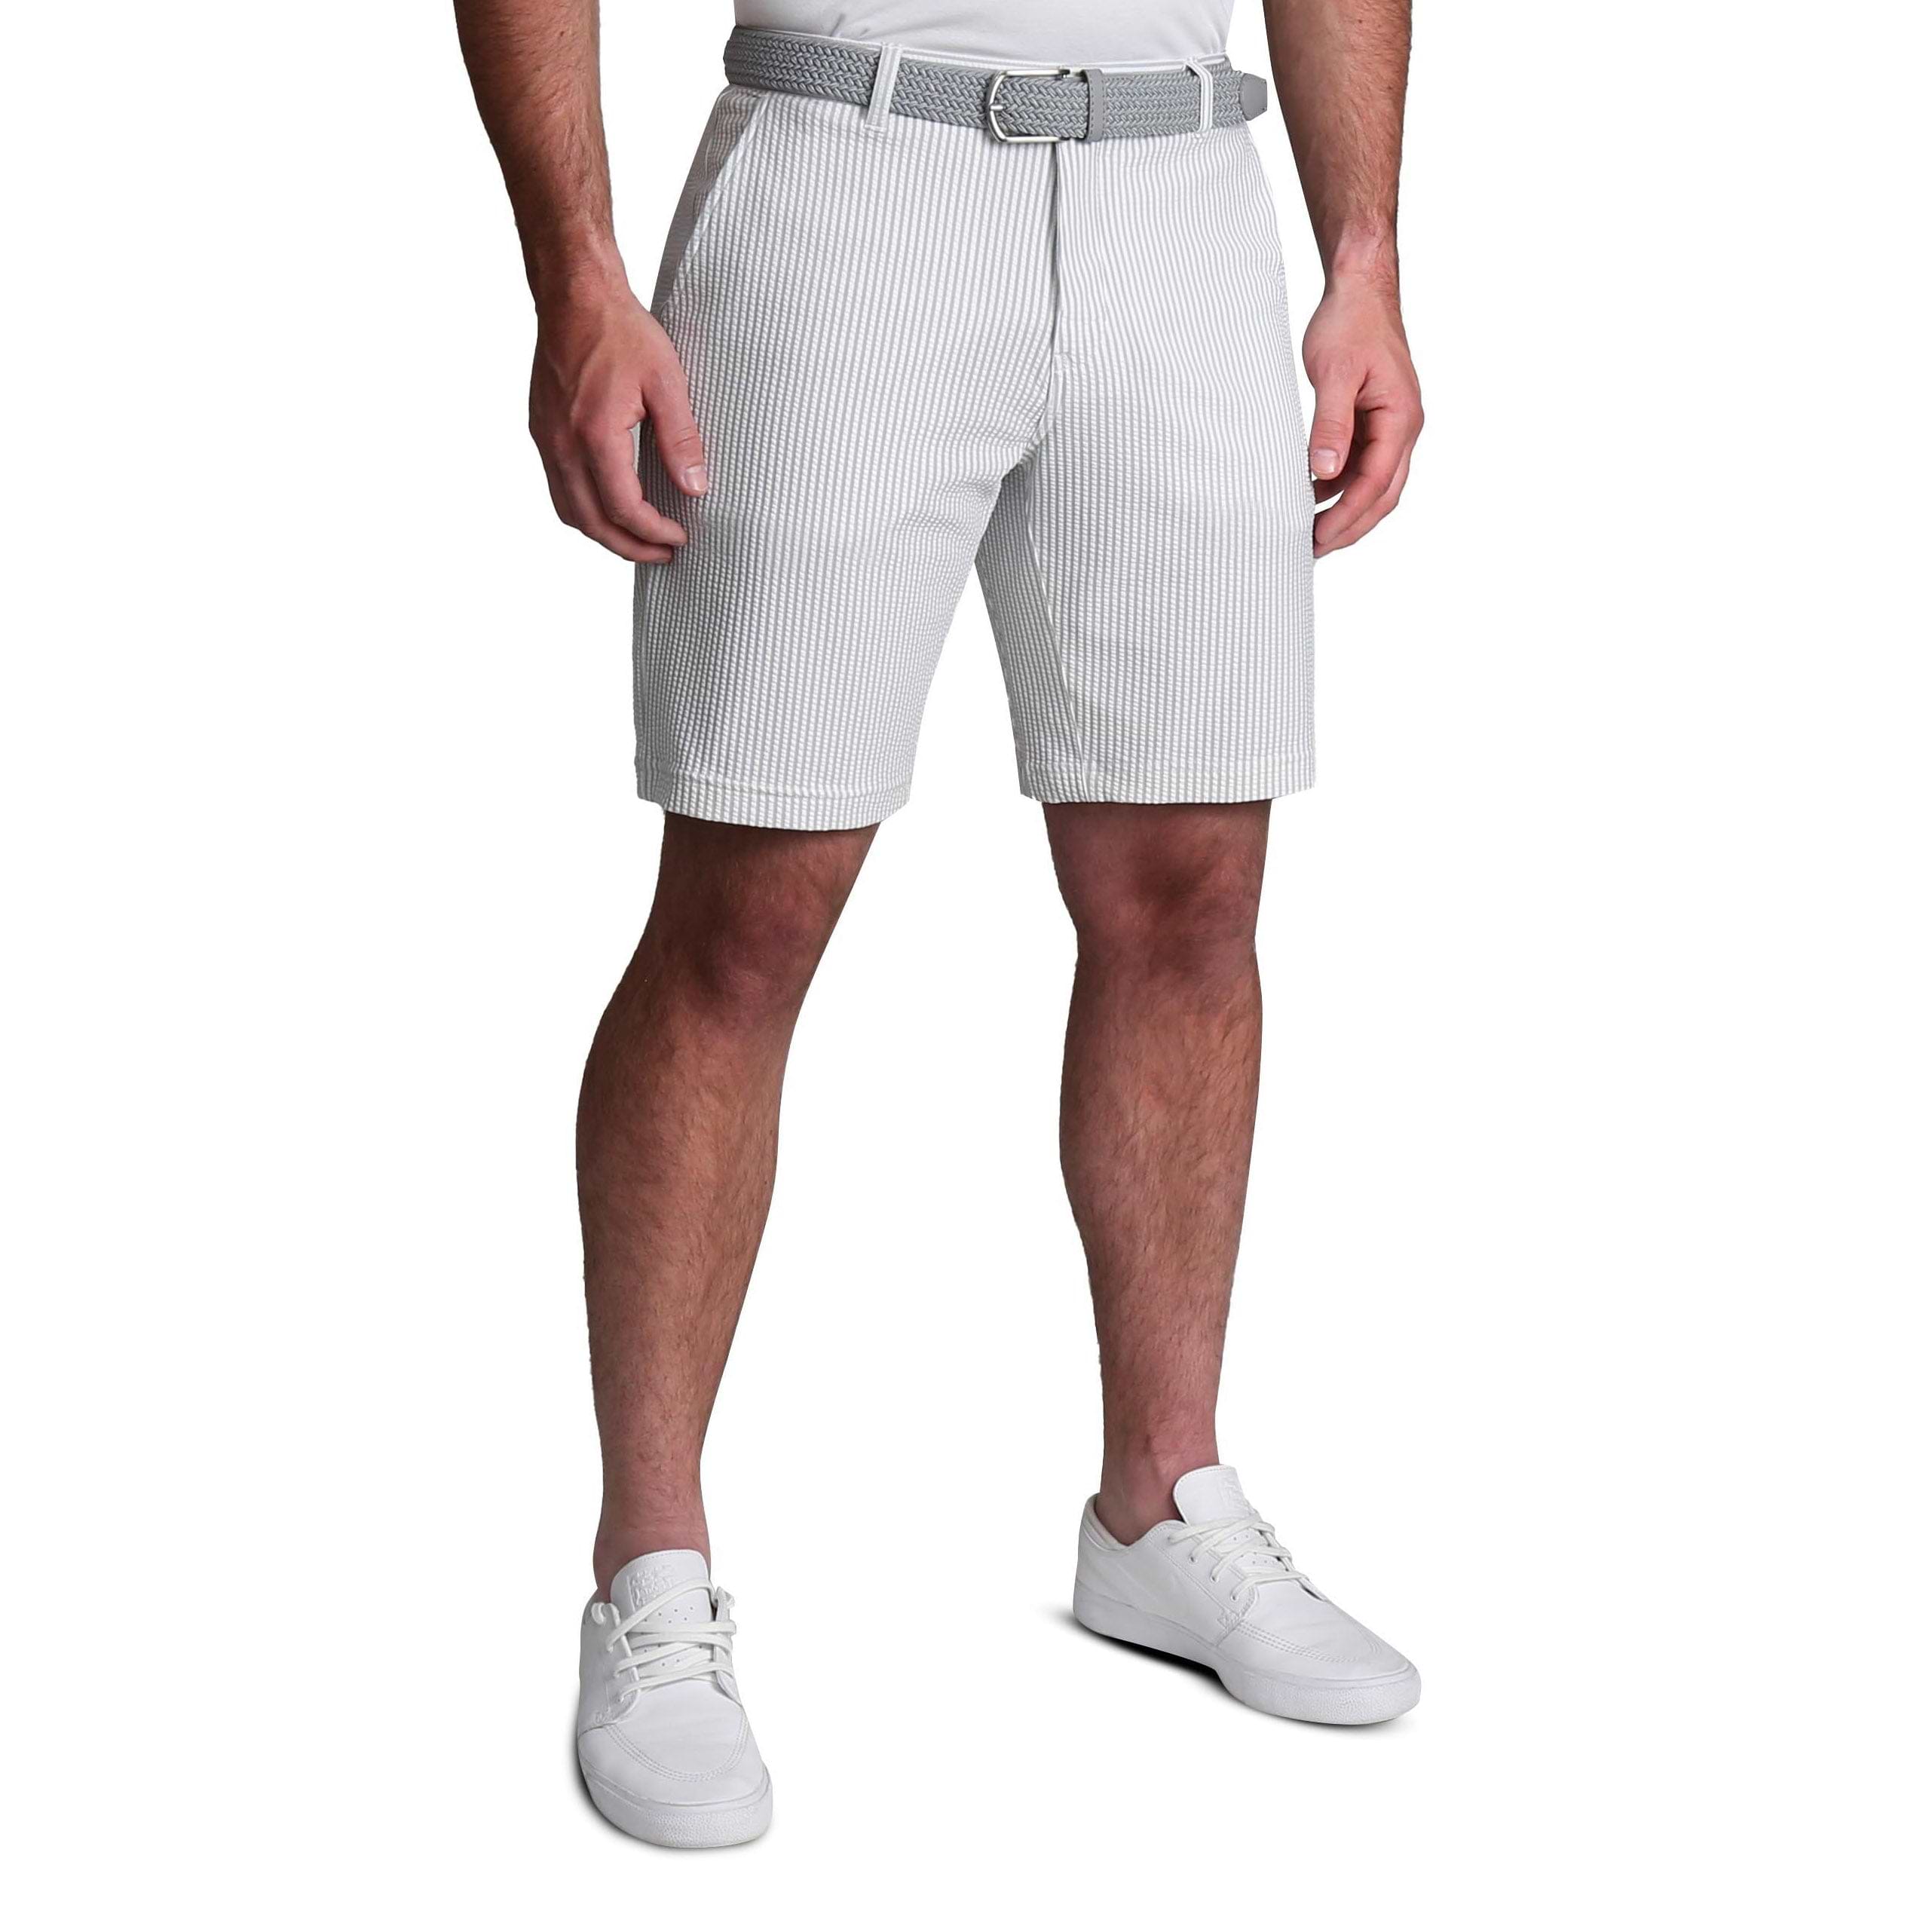 Athletic Fit Shorts - Grey Seersucker